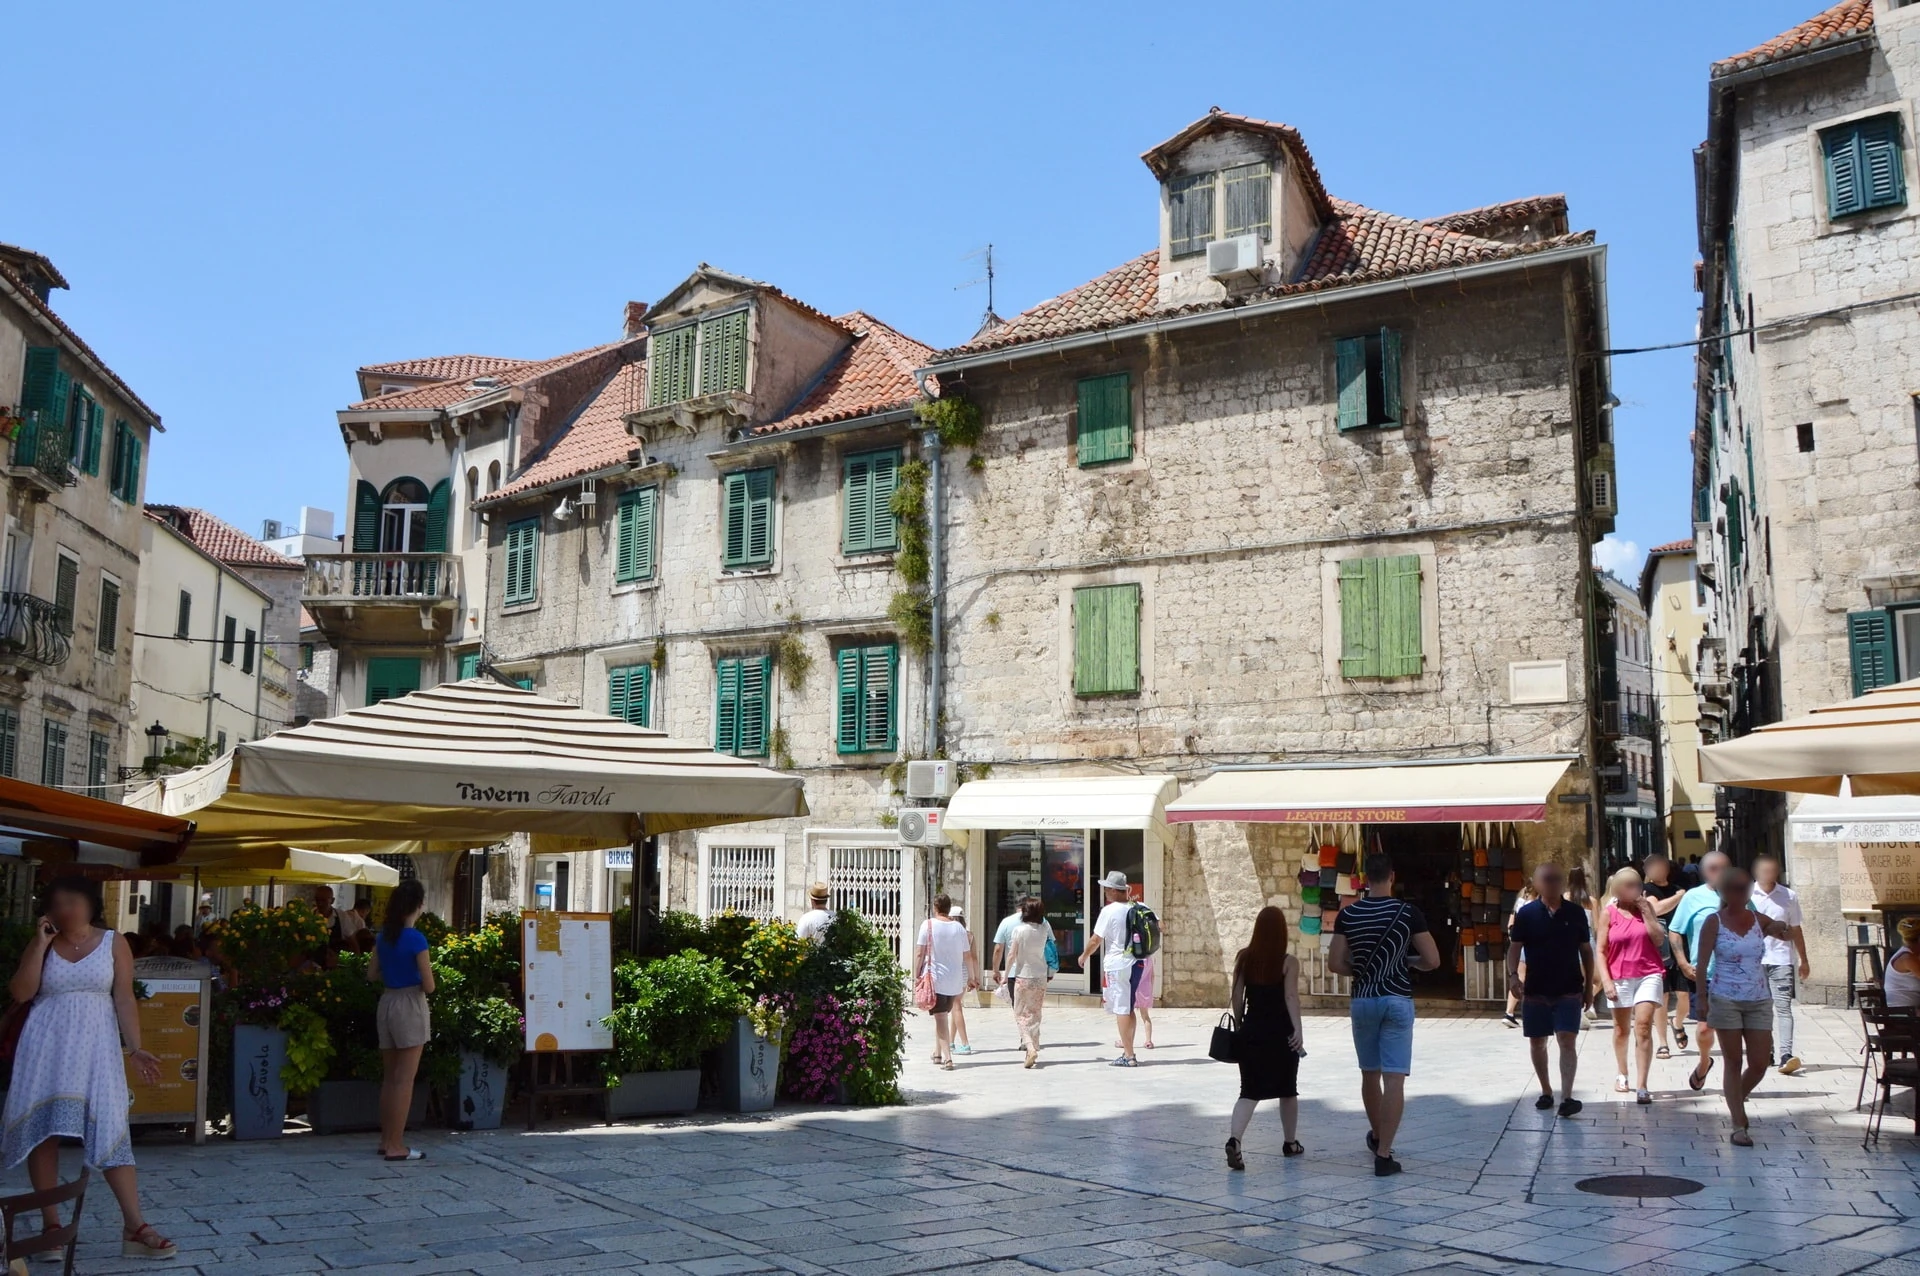 Walking through the narrow streets of Split historic centre